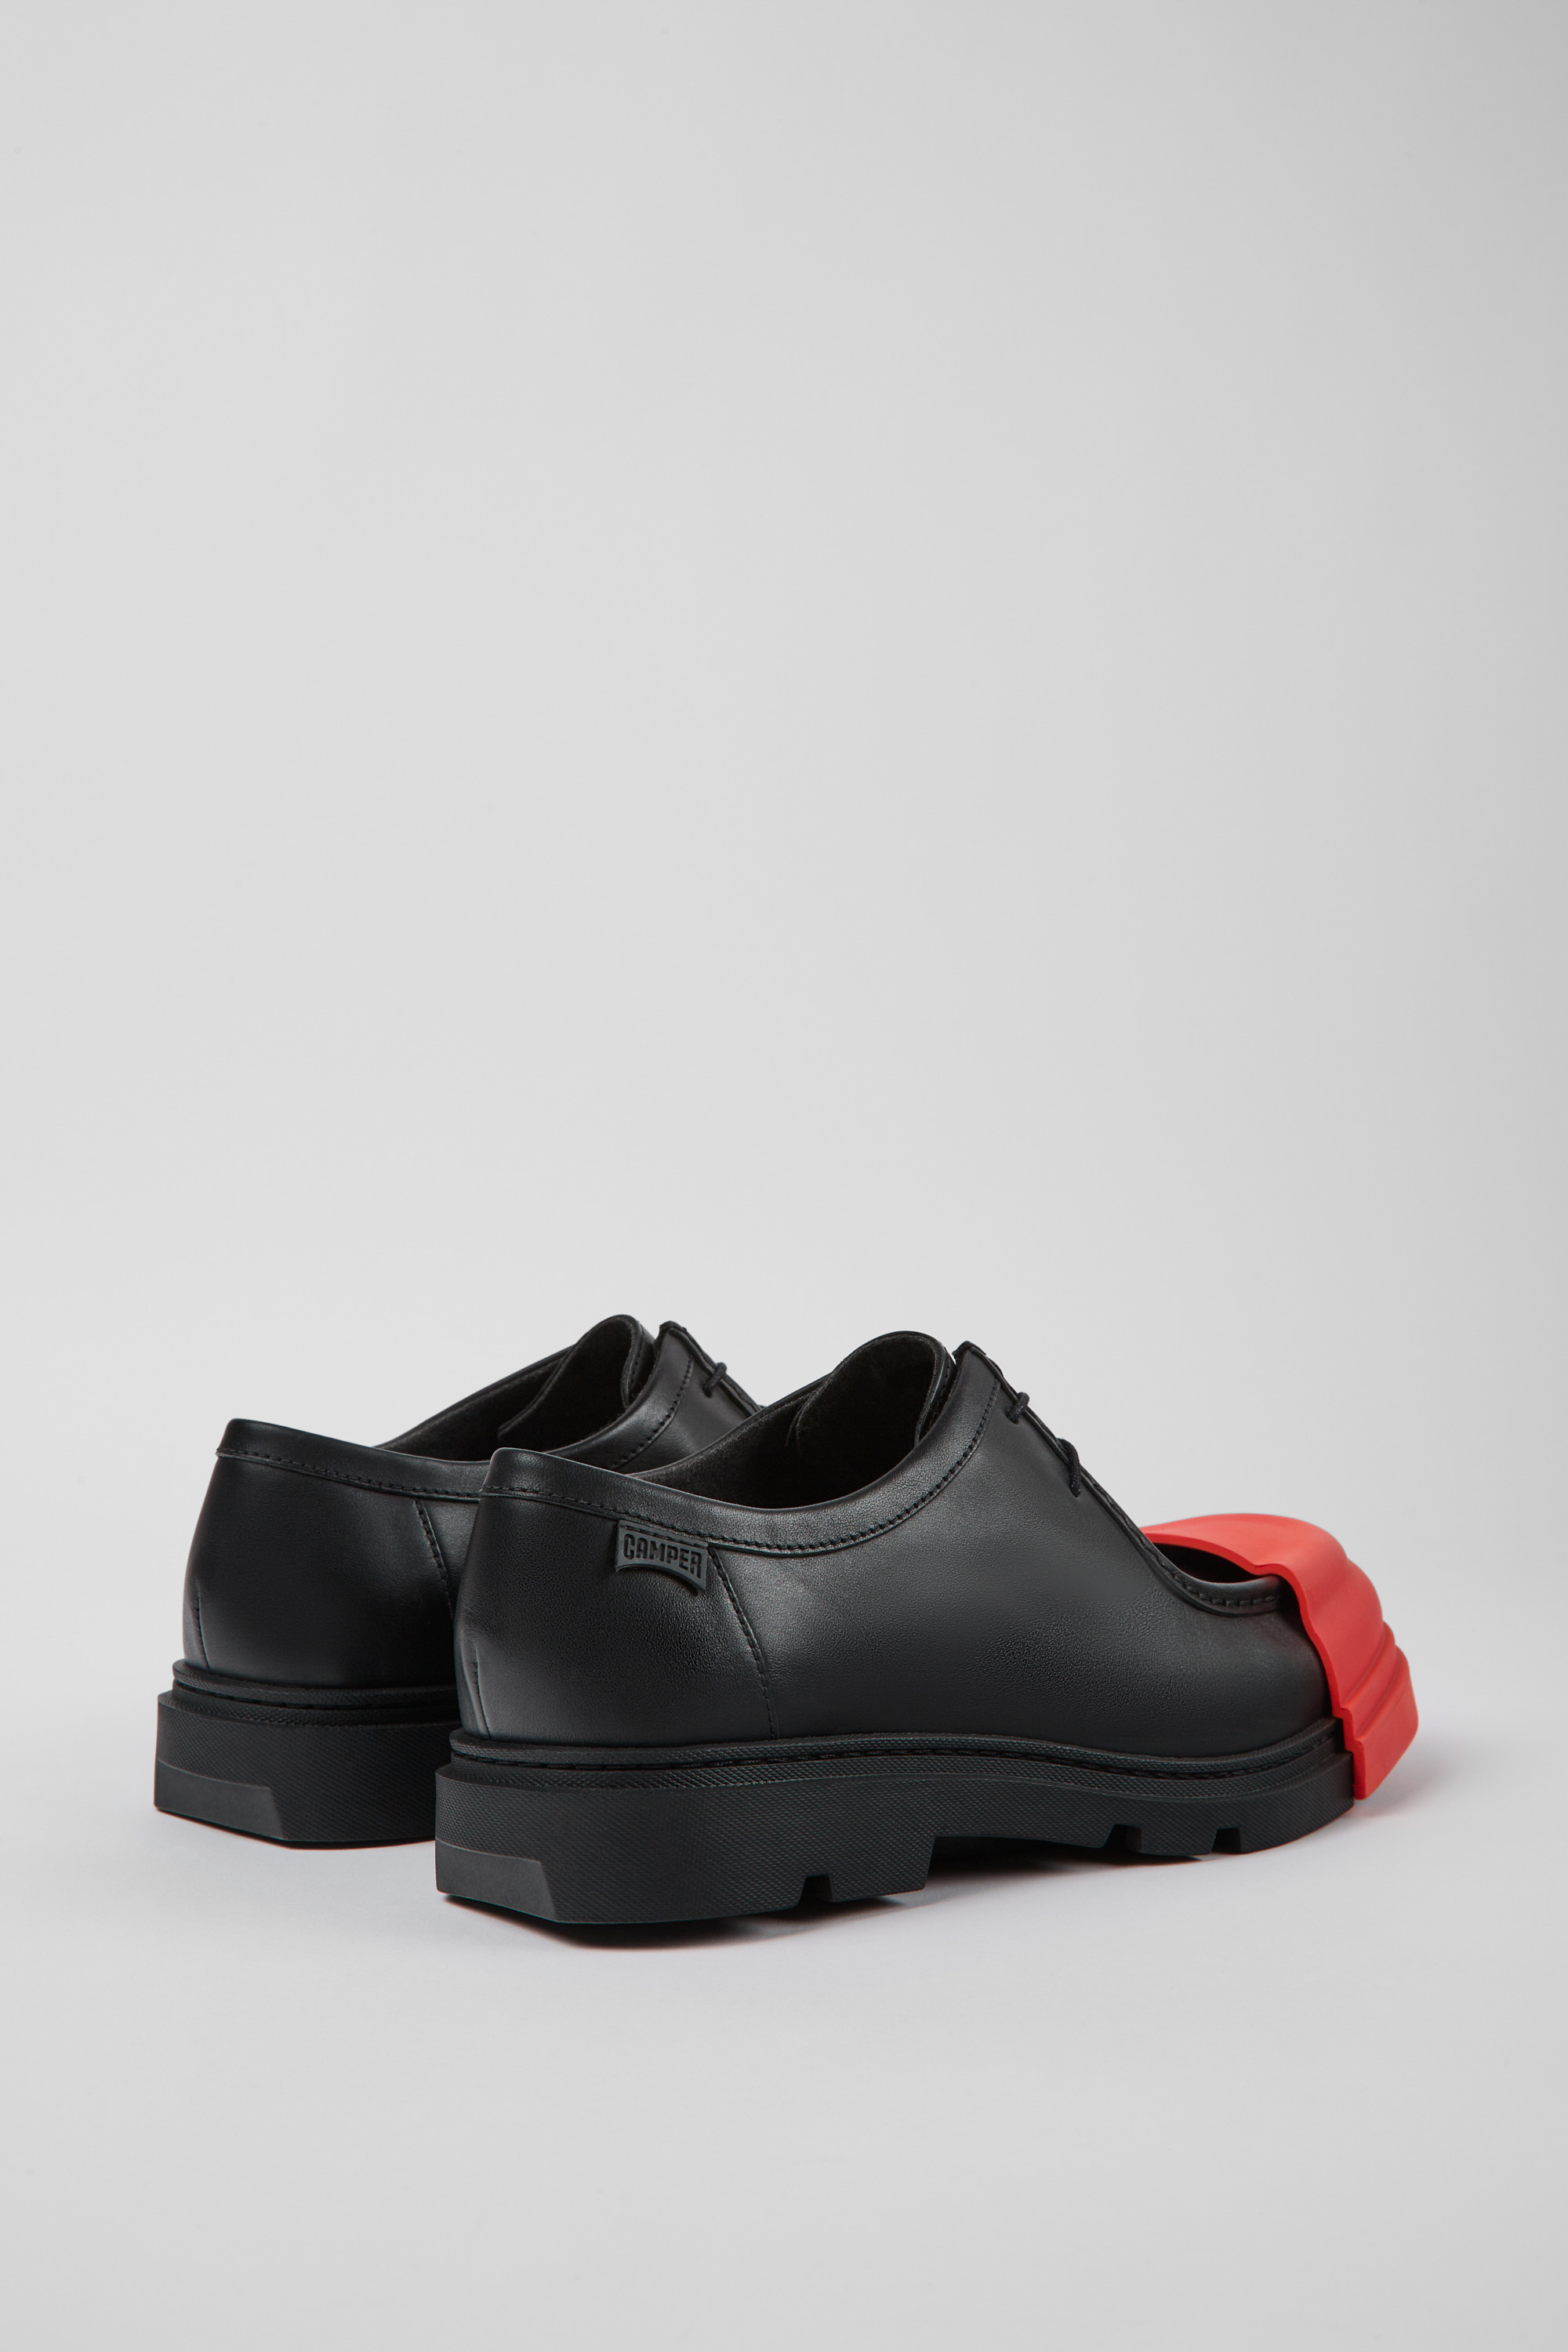 smr Black Formal Shoes for Men - Autumn/Winter collection - Camper USA